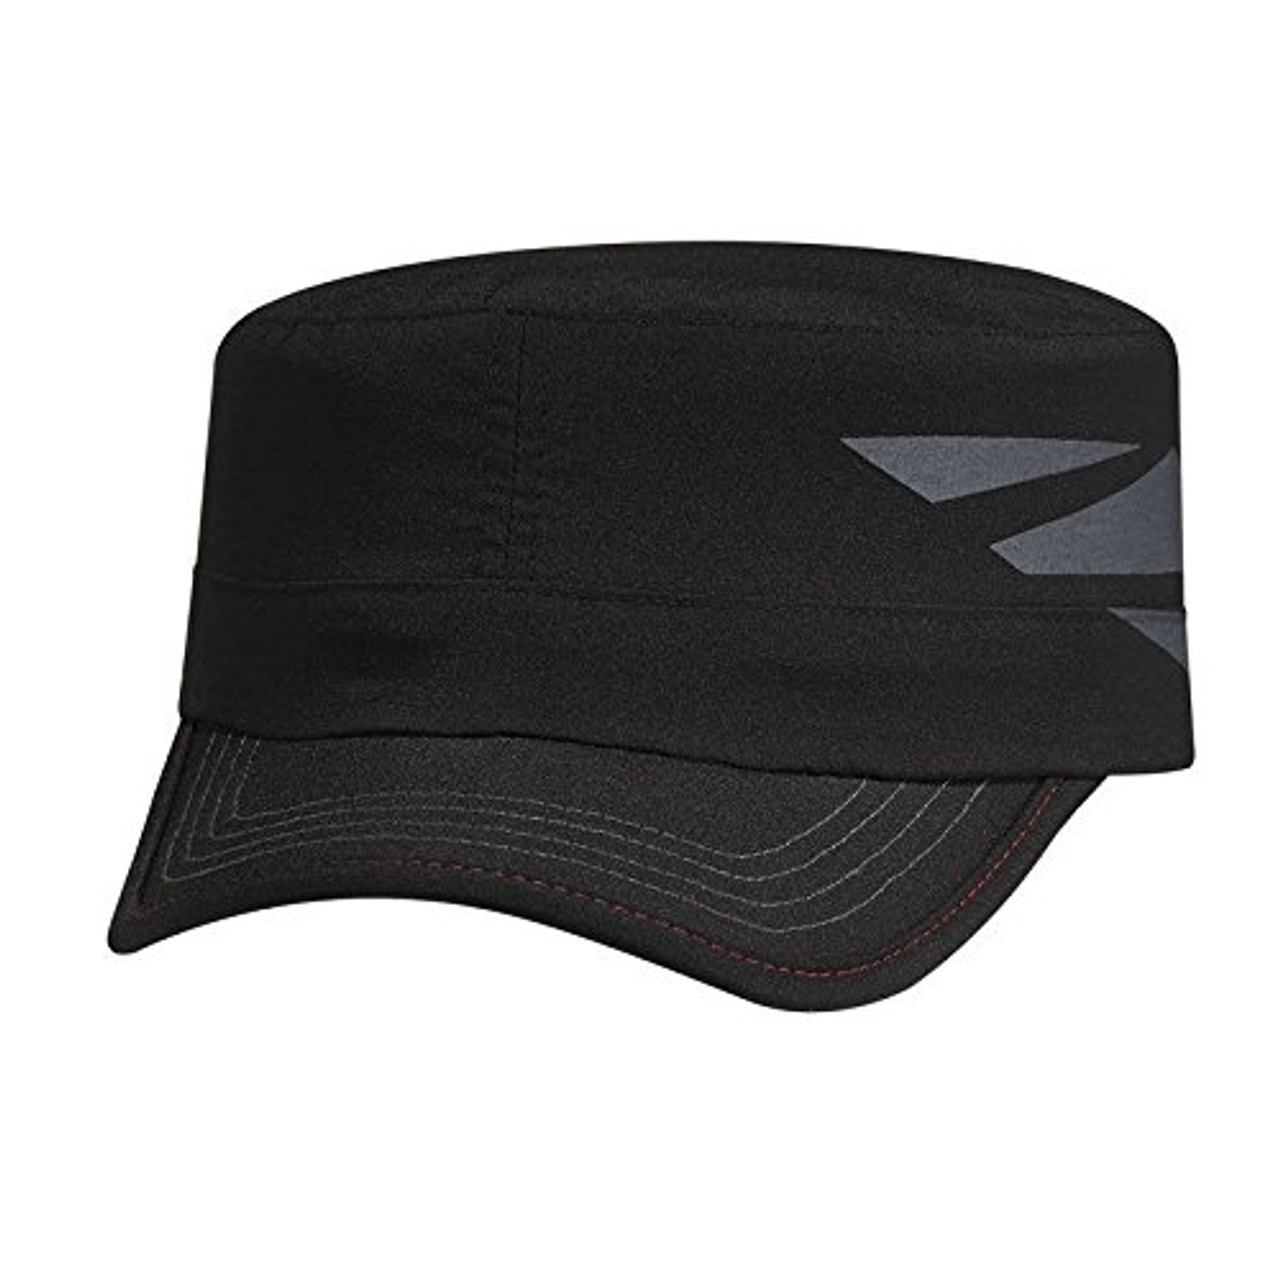 Sea-Doo Men's Fitted Black Freedom Cap Hat L/XL 2863517390